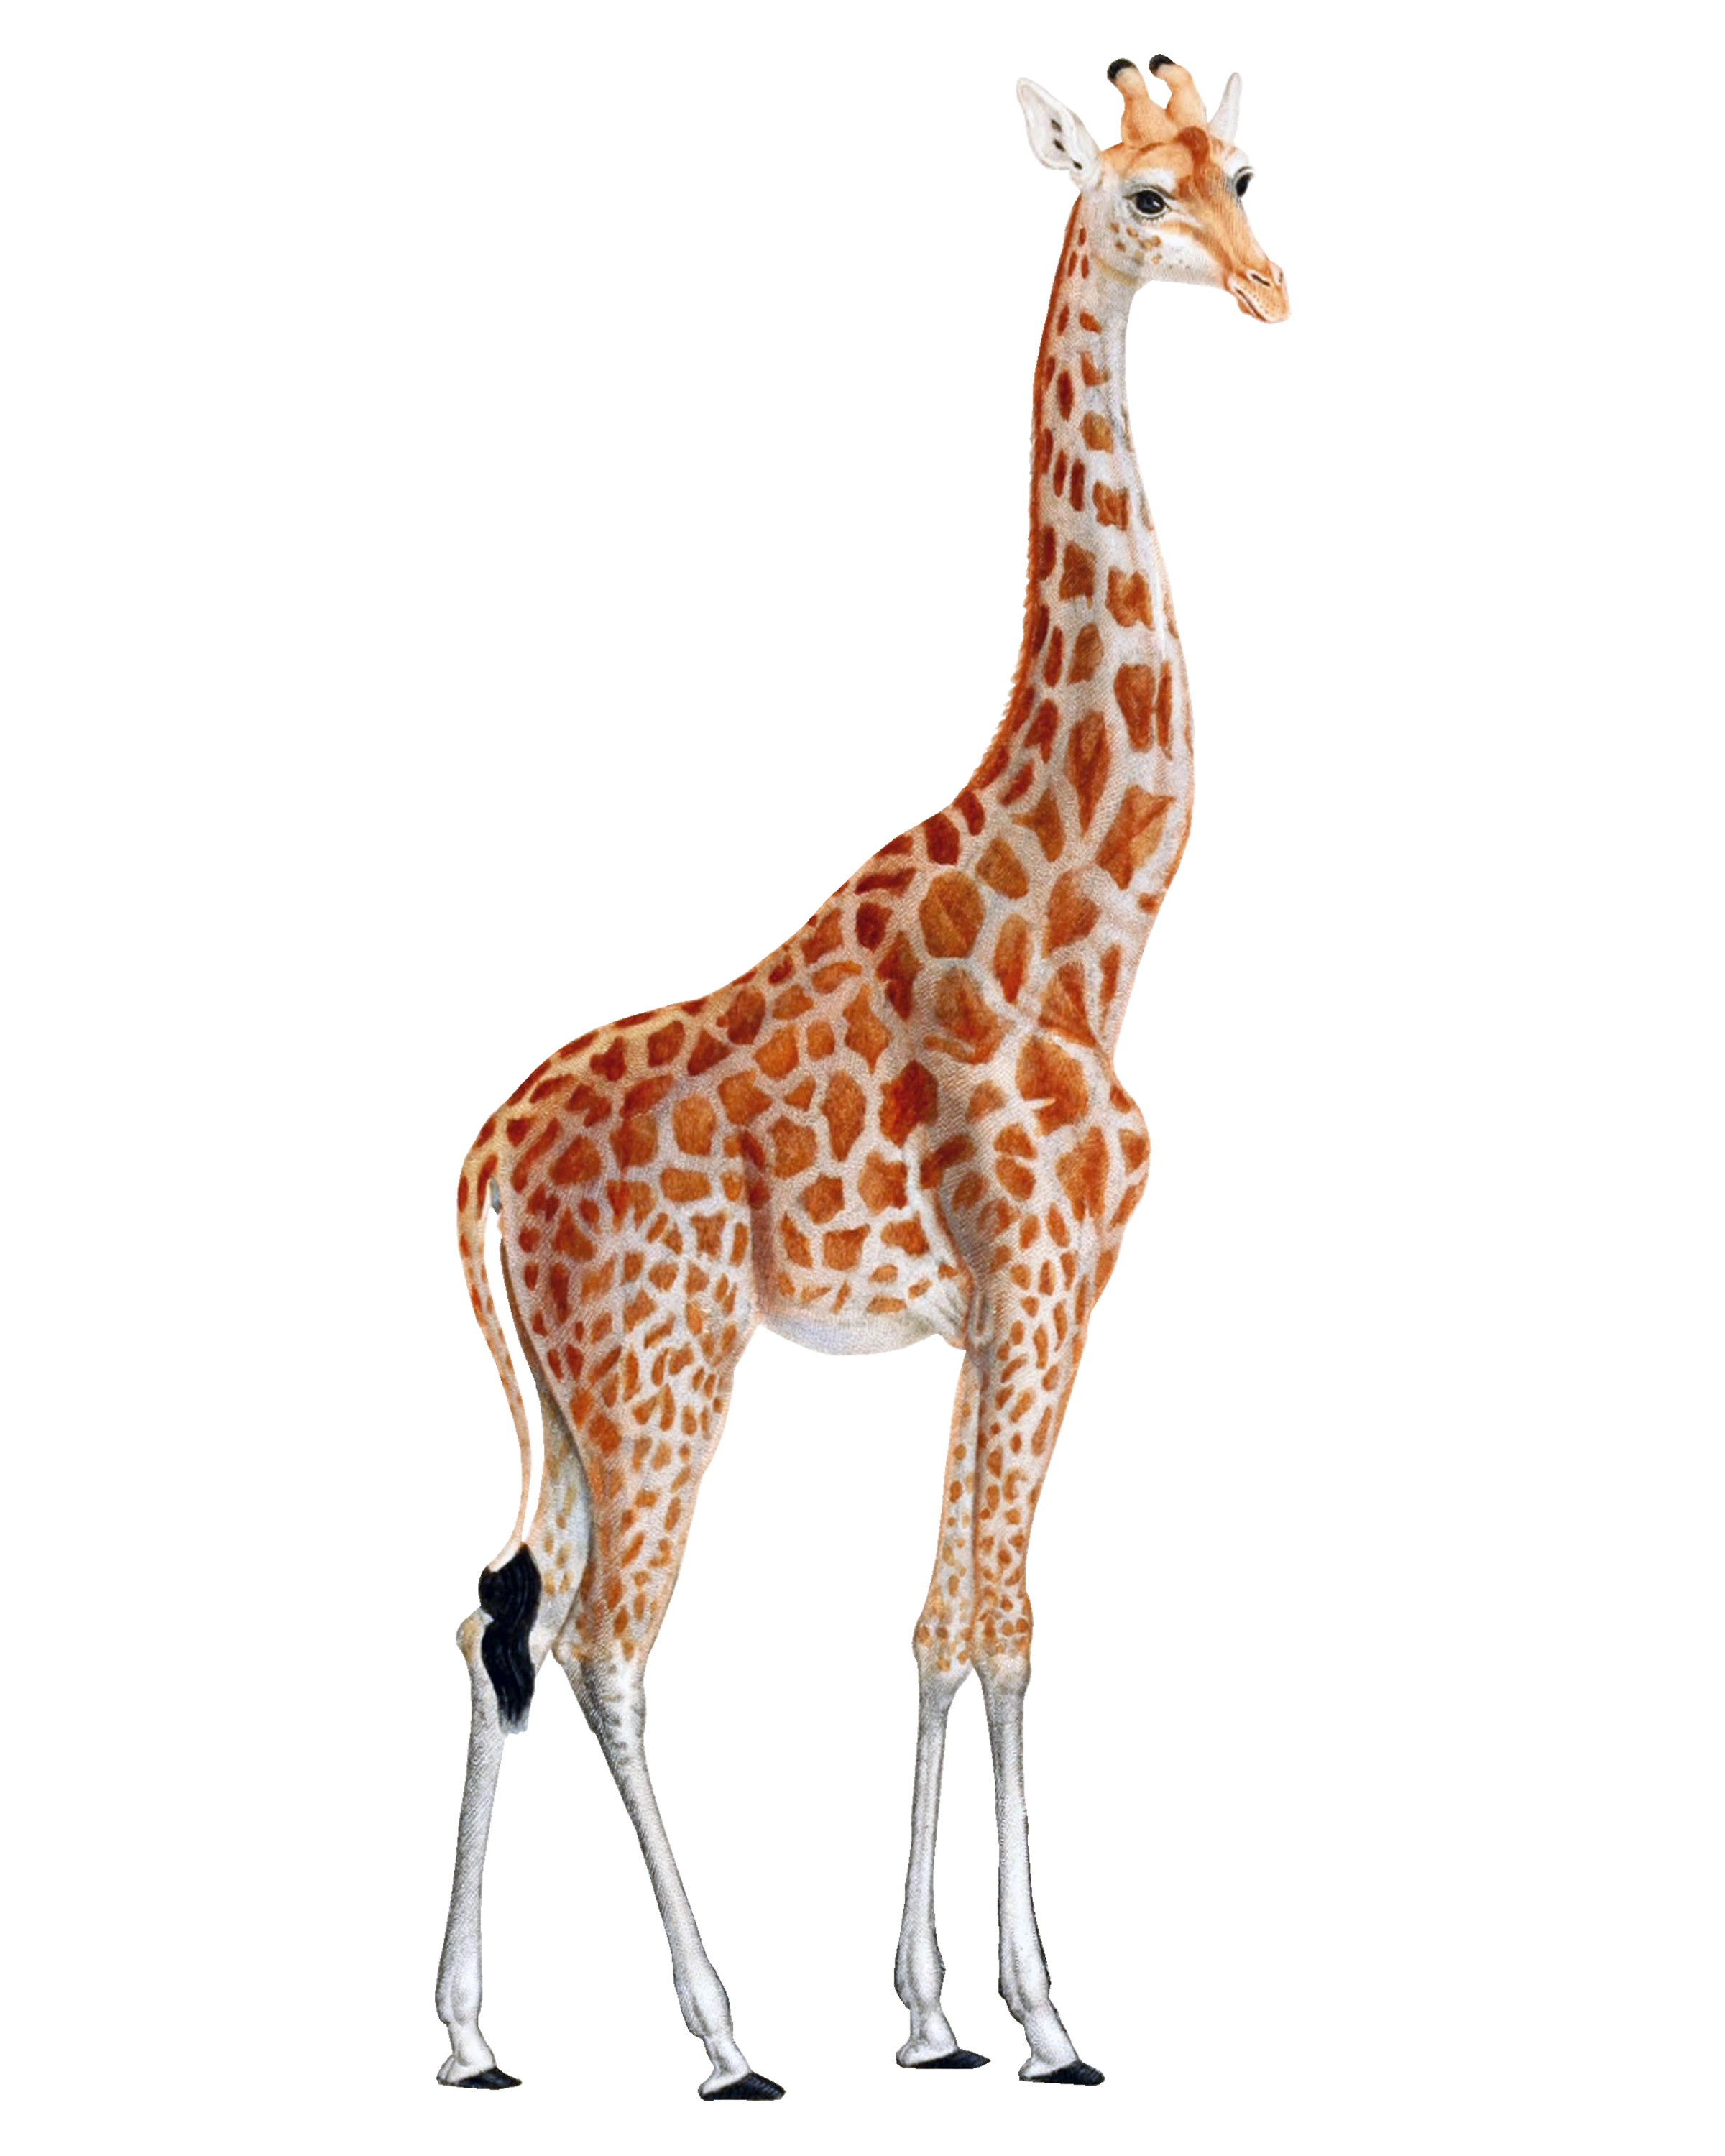 Girafe PNG HQ Pic